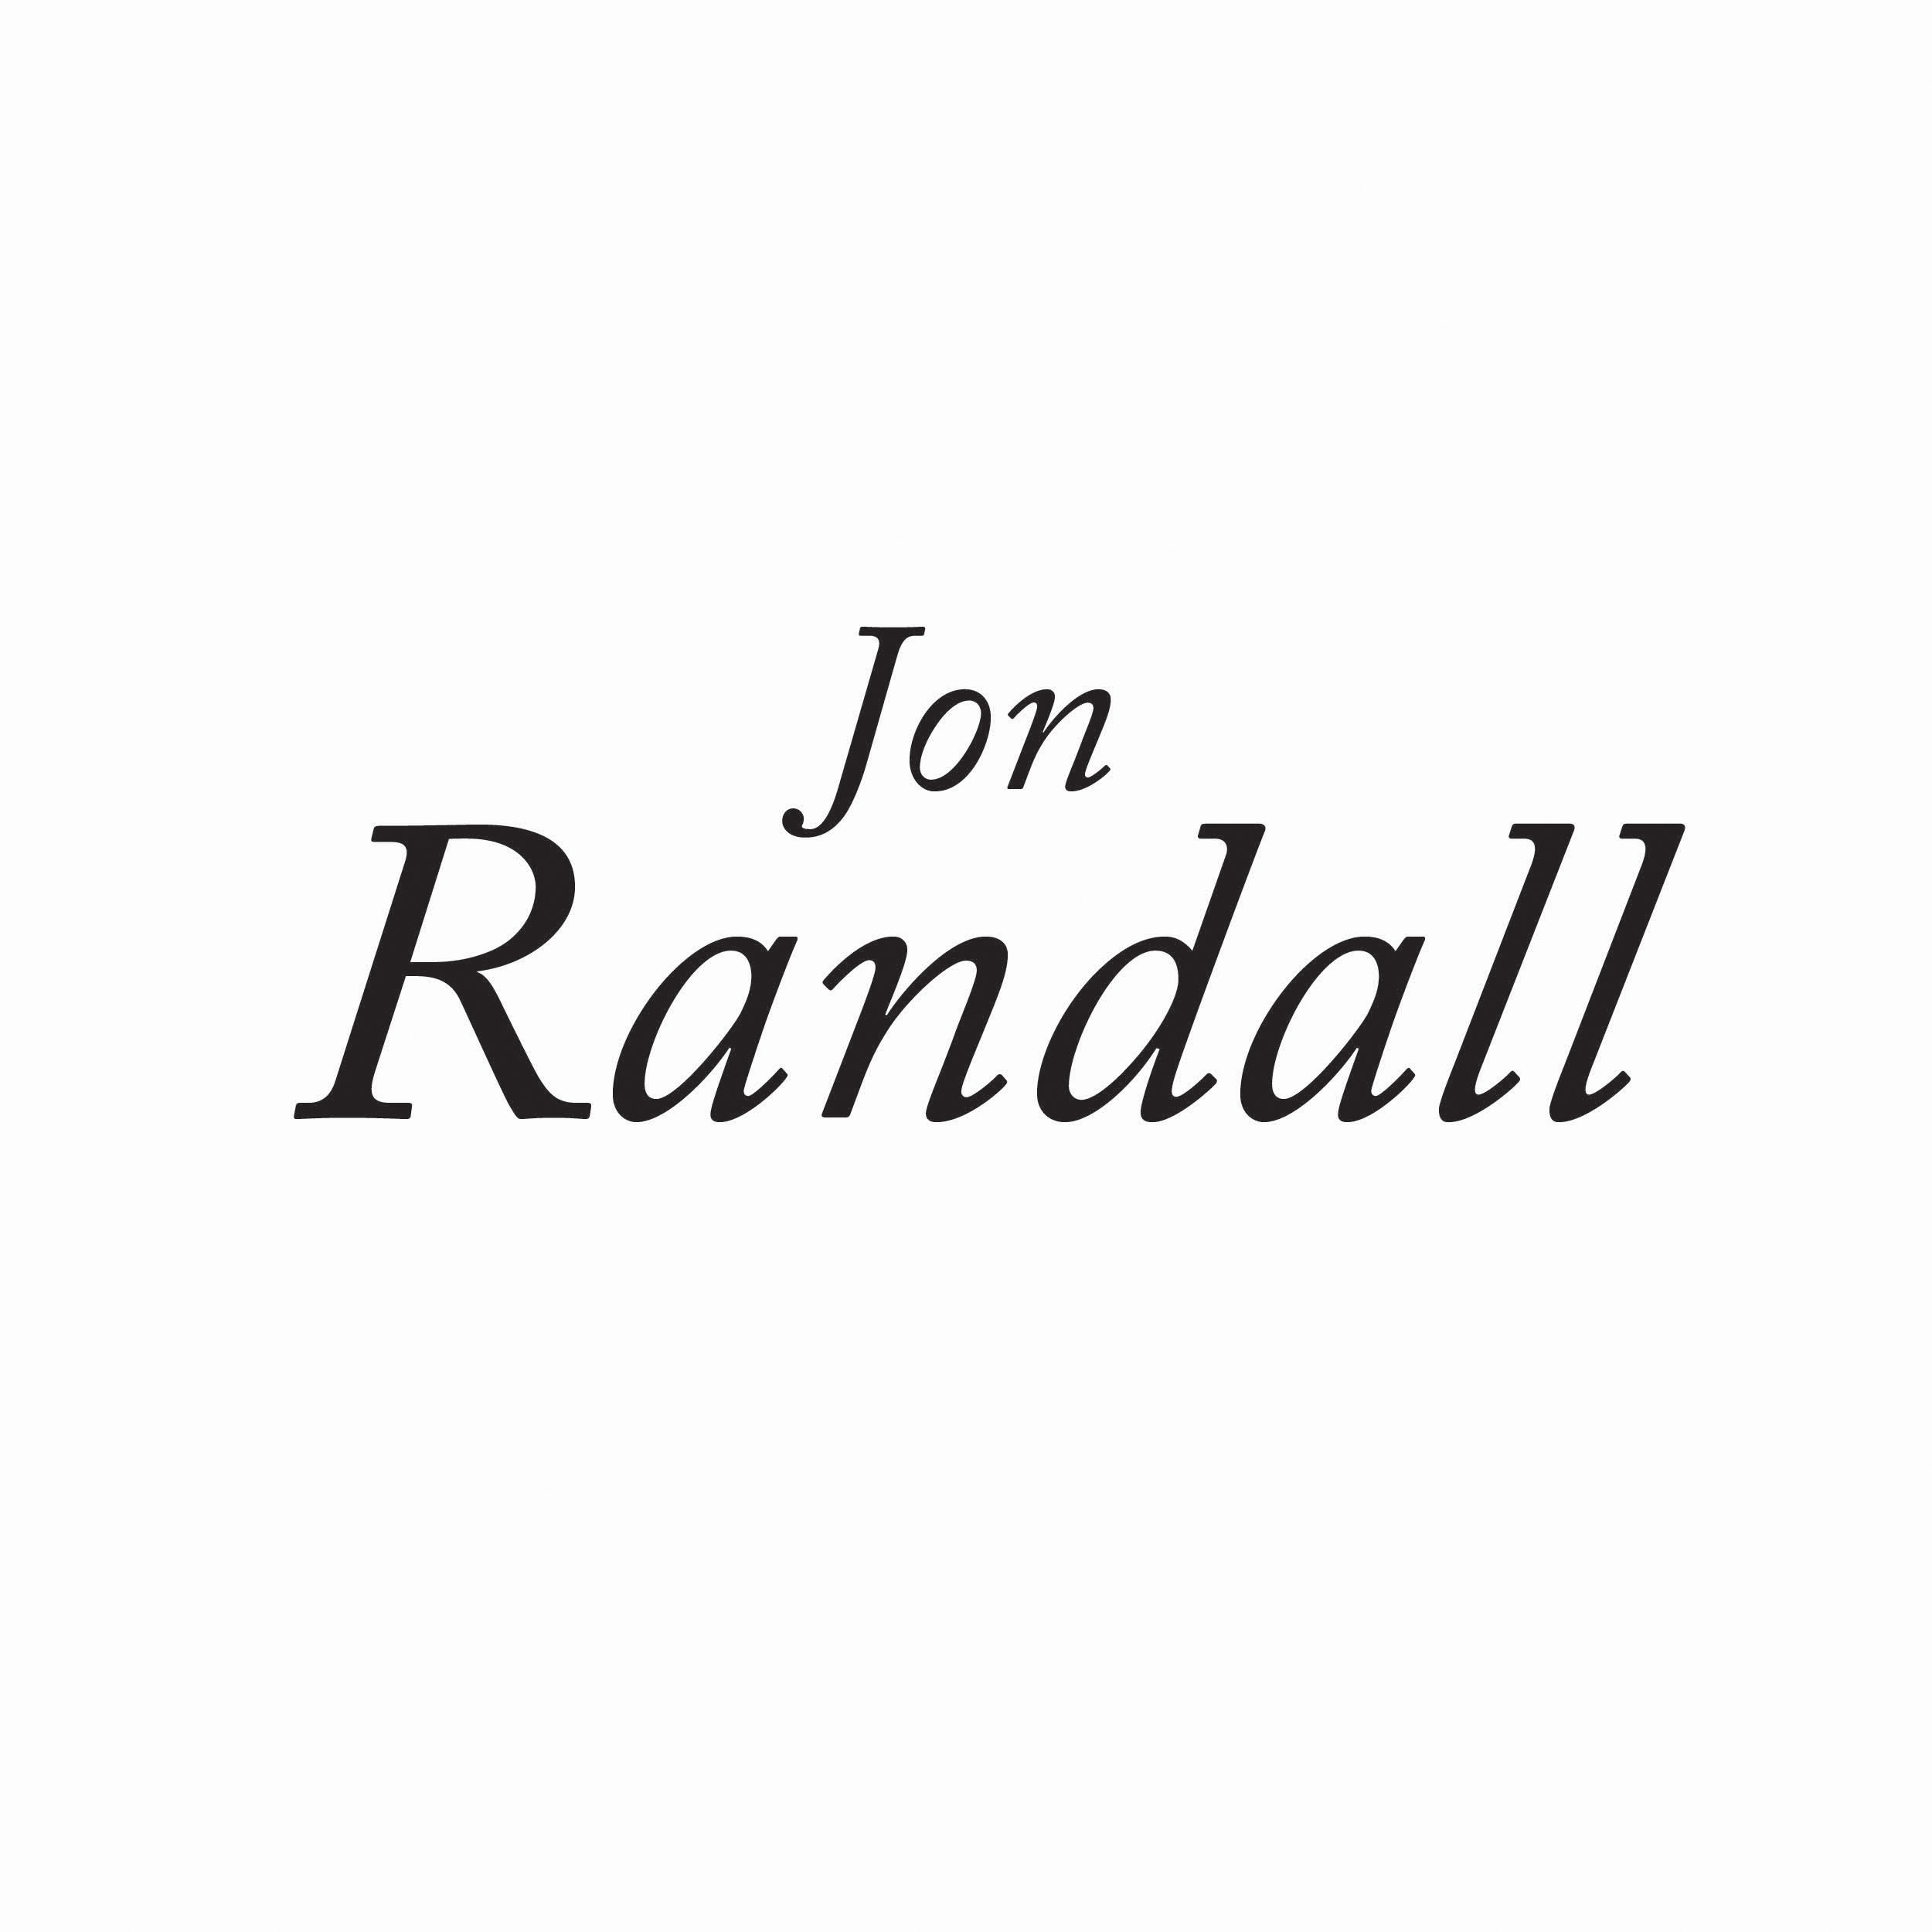 Jon Randall